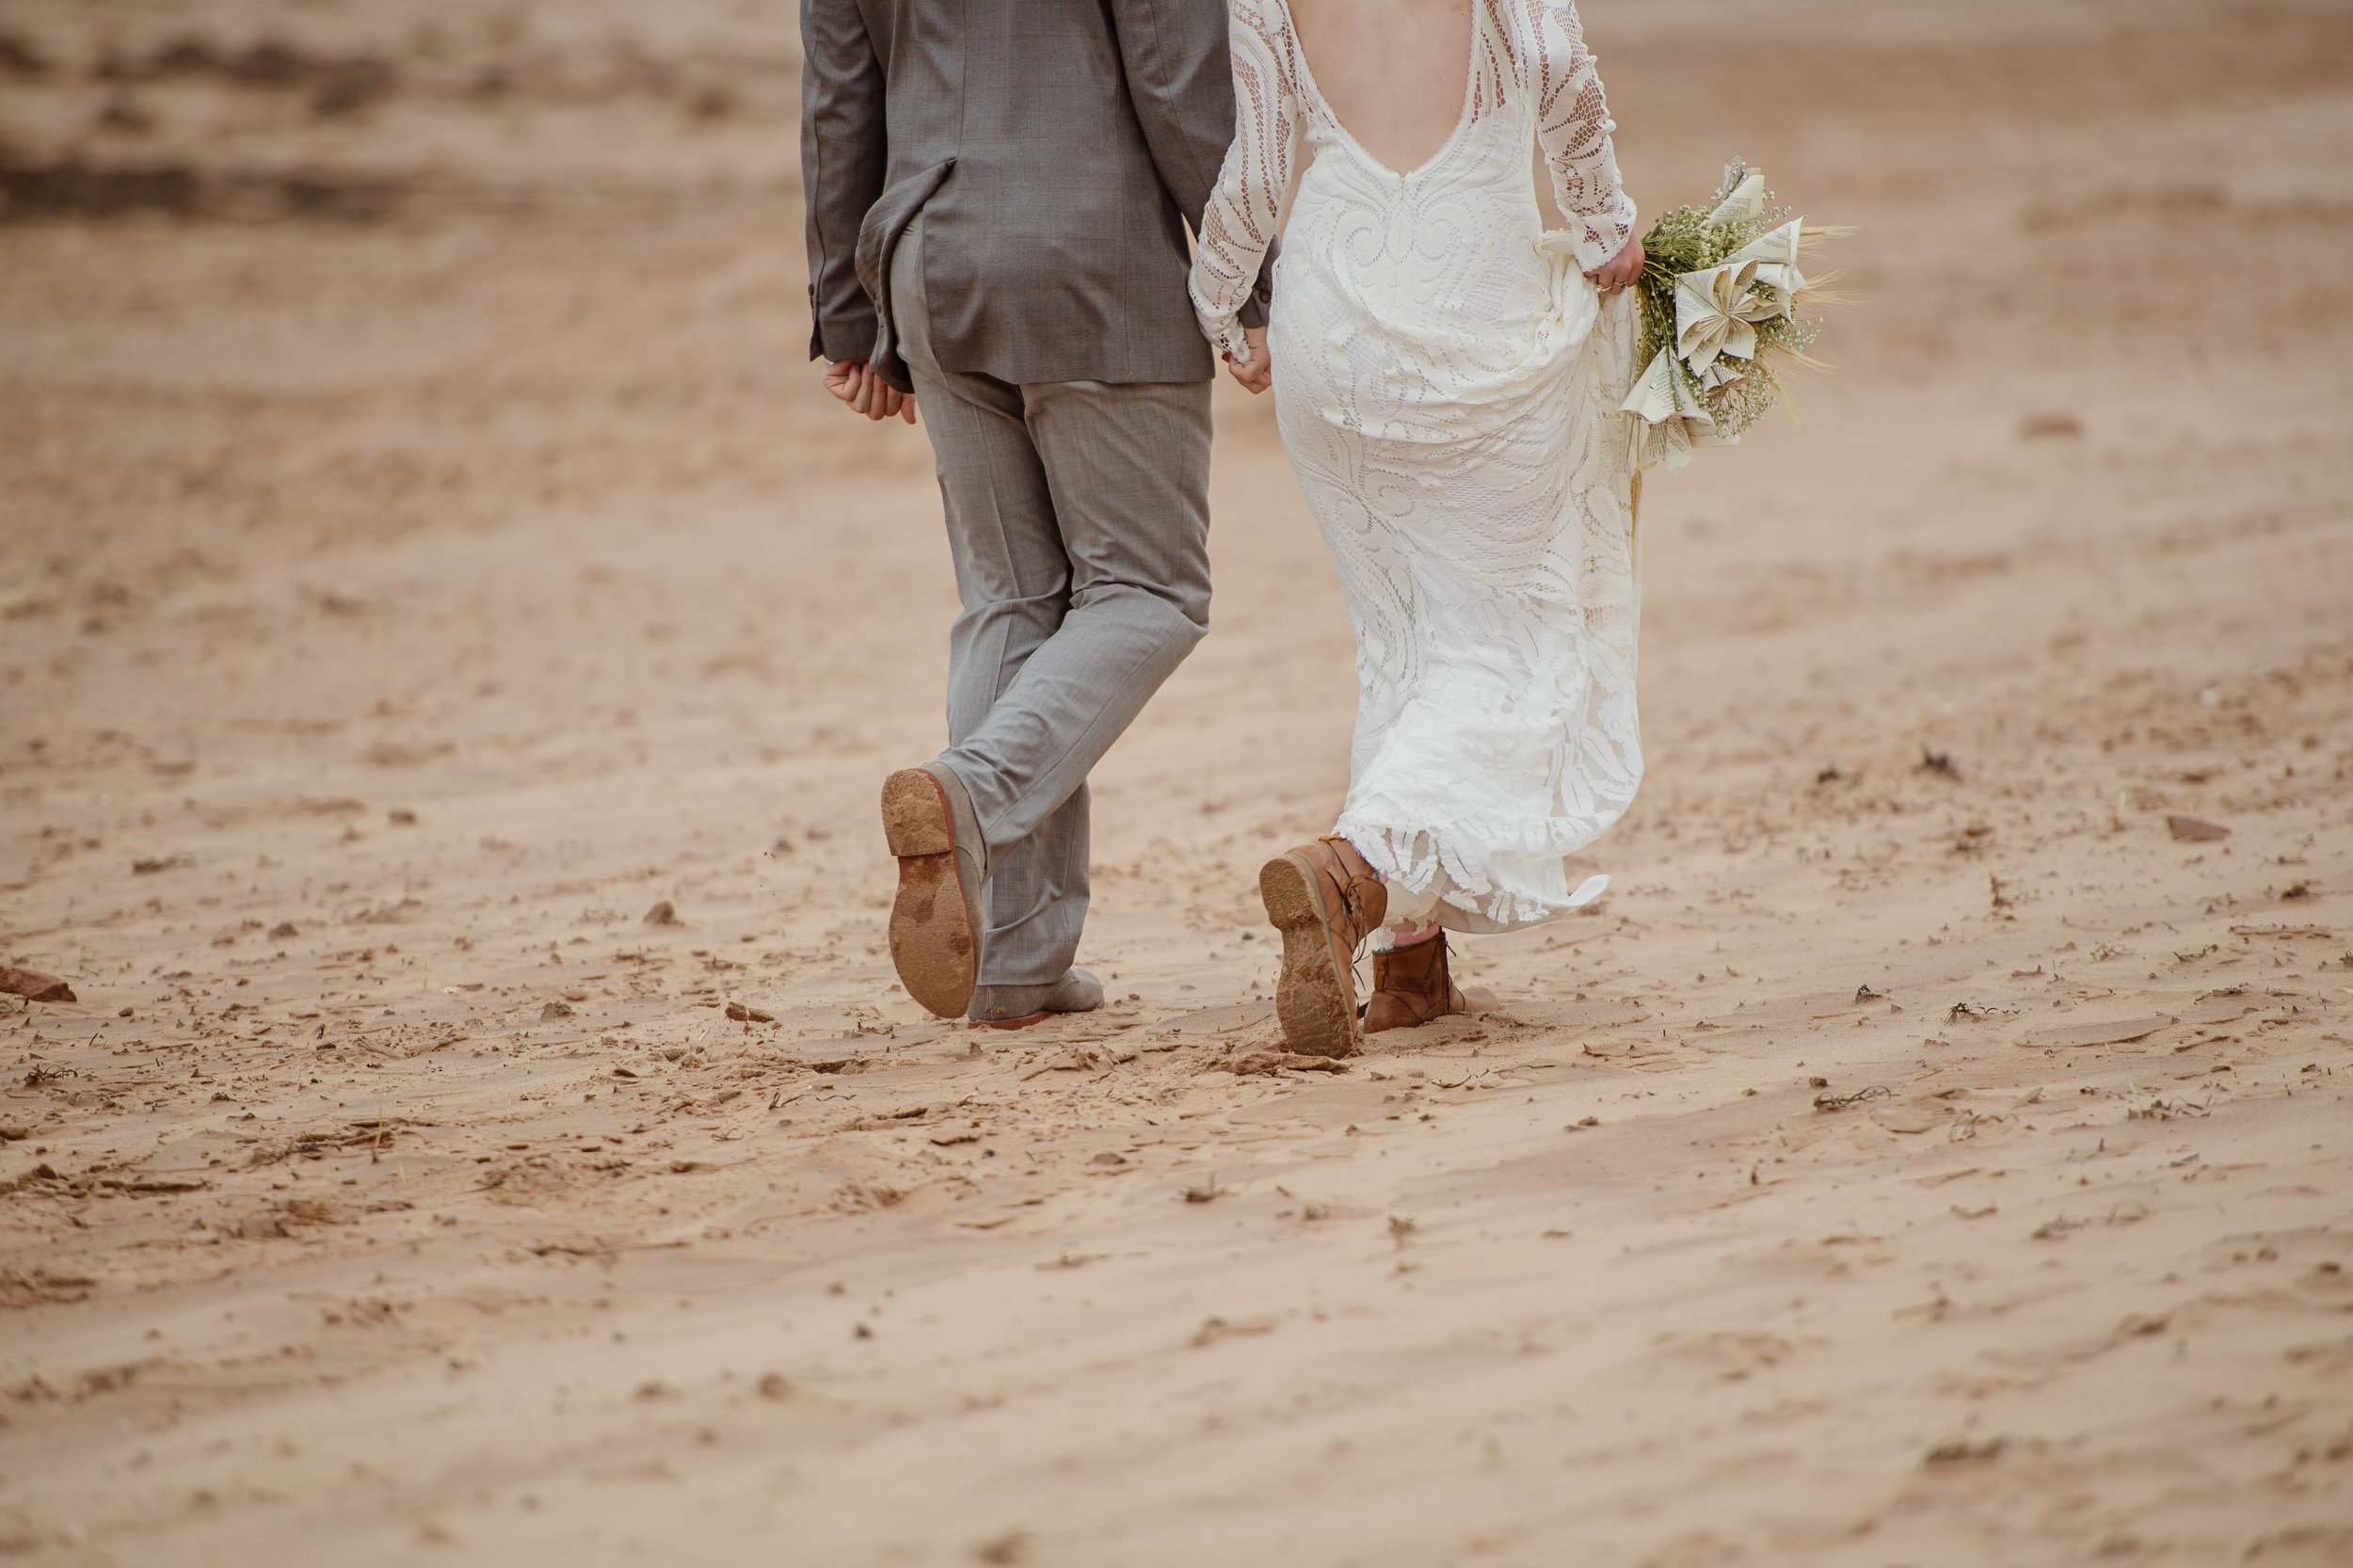 A Prince Edward Island Nova Scotia Wedding - The Overwhelmed Bride Wedding Blog